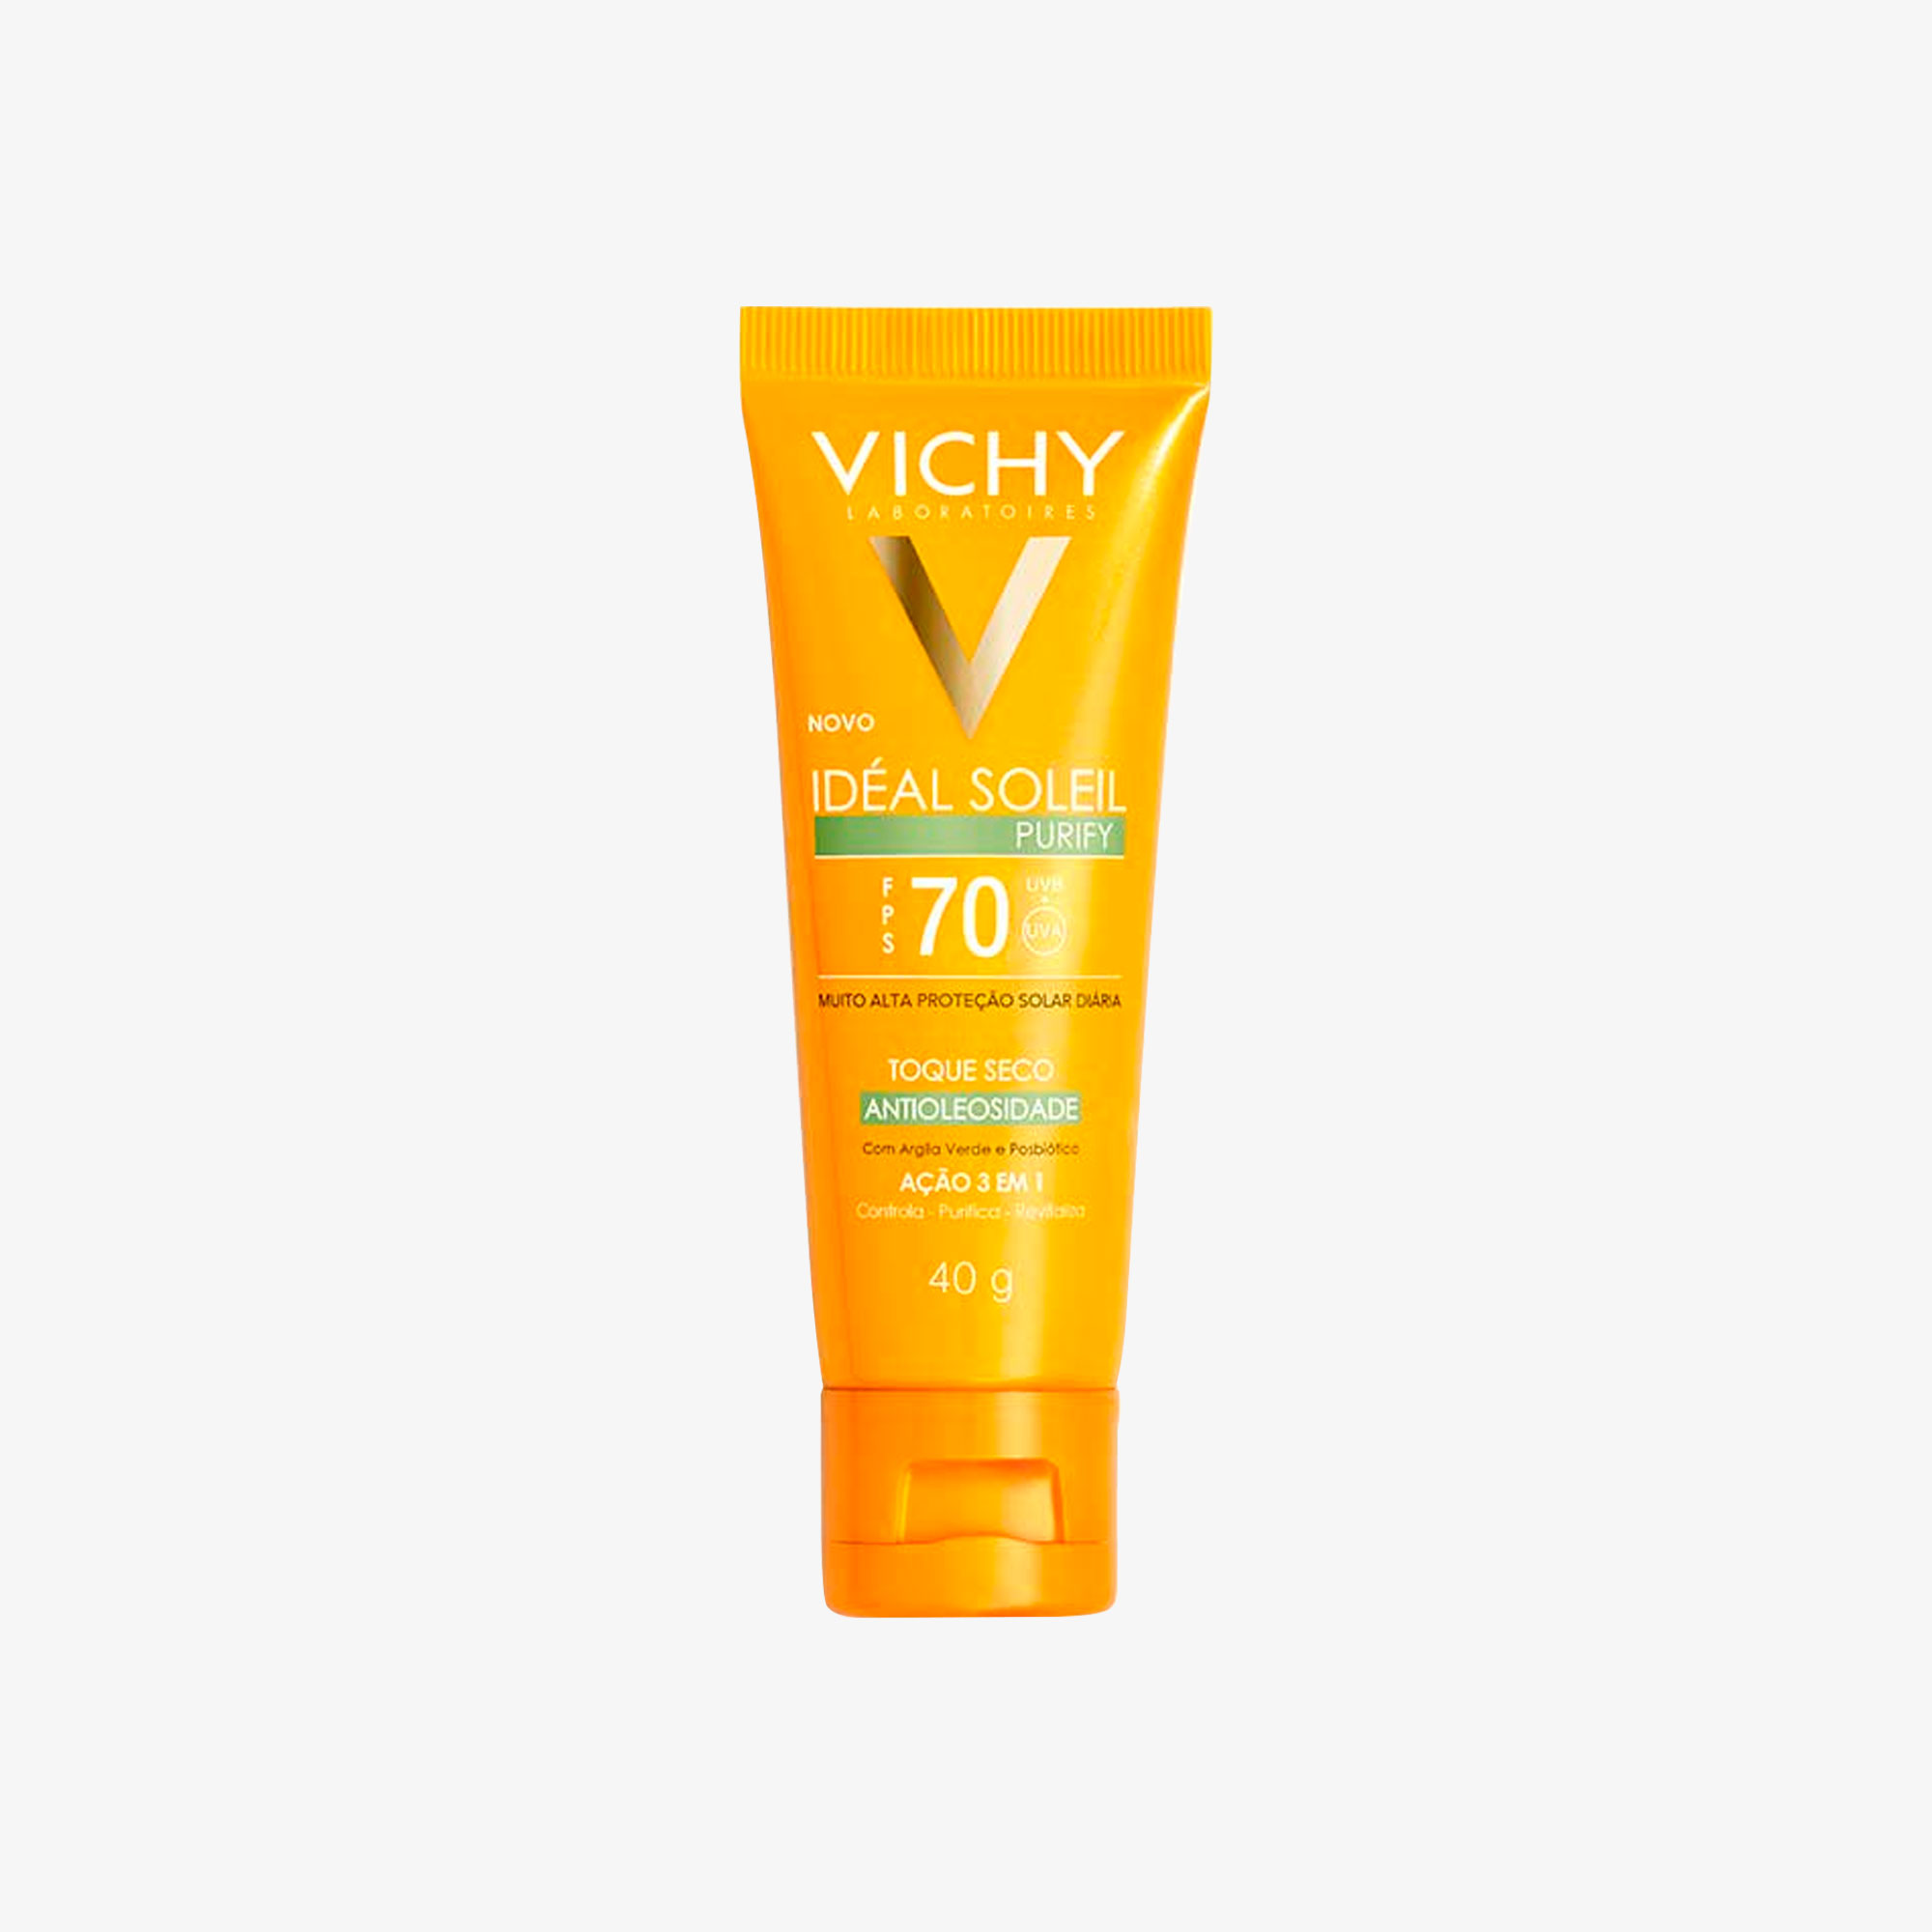 Protetor Solar Facial Vichy Ideal Soleil Purify FPS70 - 40g Packshot